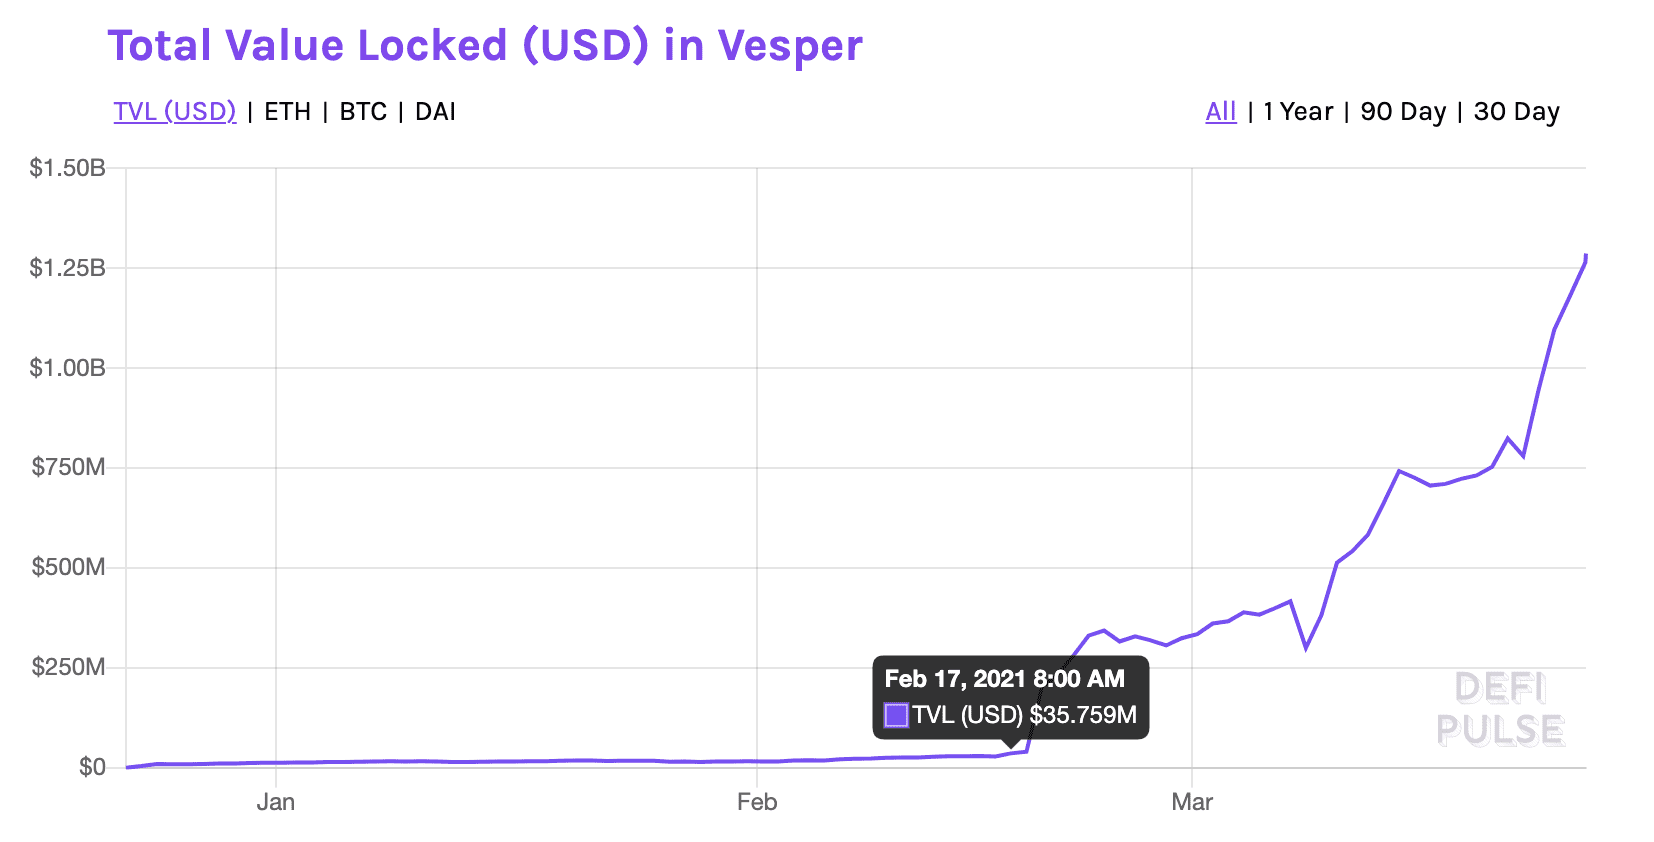 Compound创始人参投，锁仓量40天增长10亿美元，3分钟快速看懂悄然生长的Vesper Finance